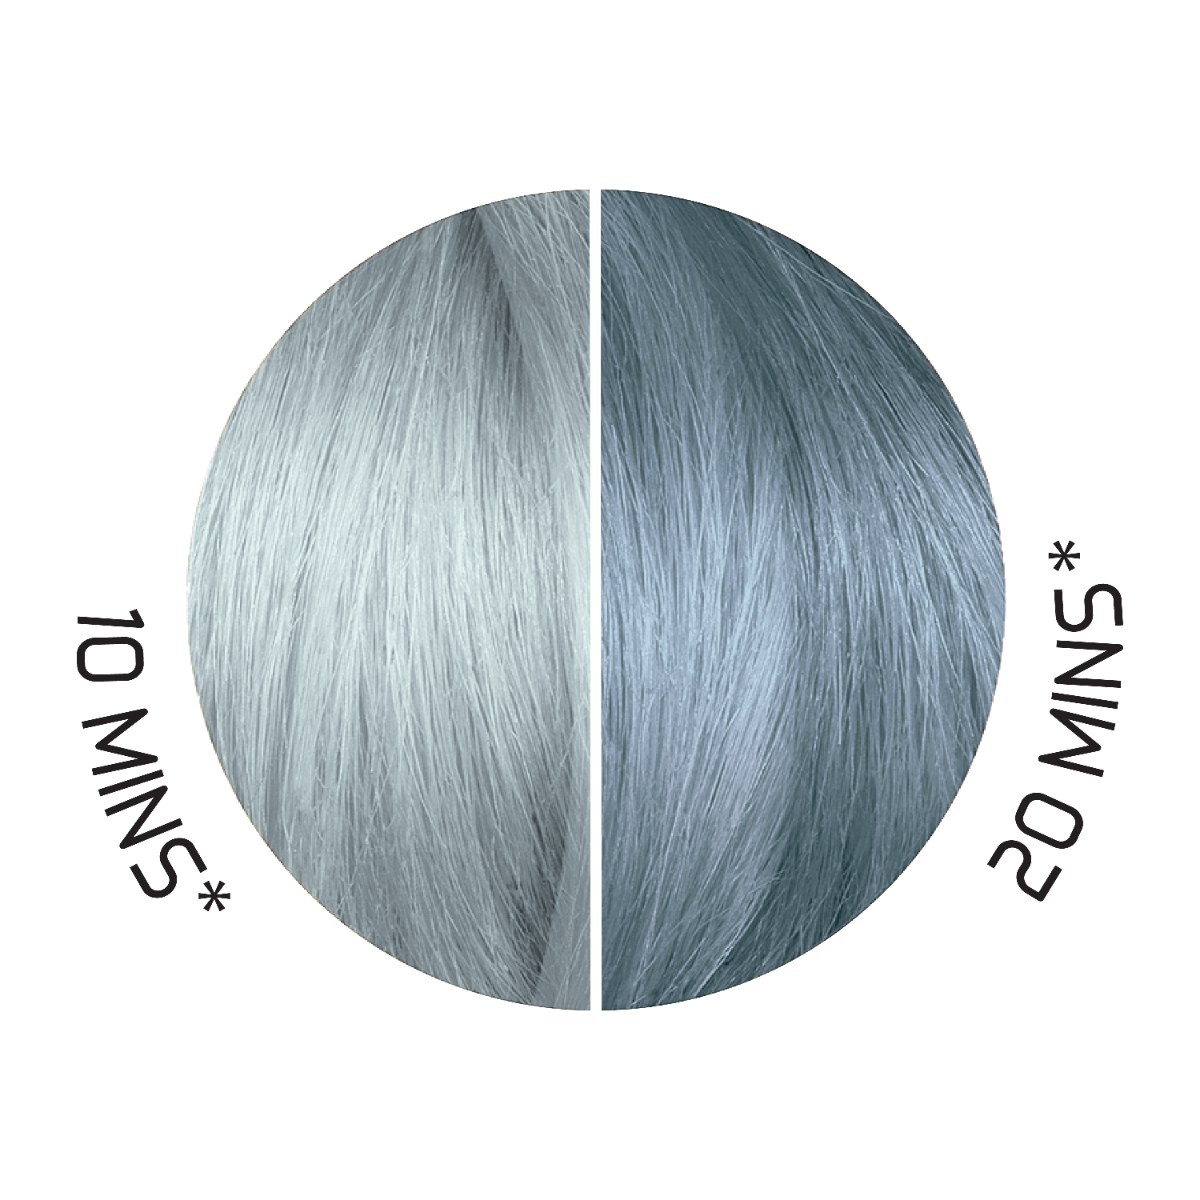 Swatch of Splat Hair Color's Titanium Hair Dye